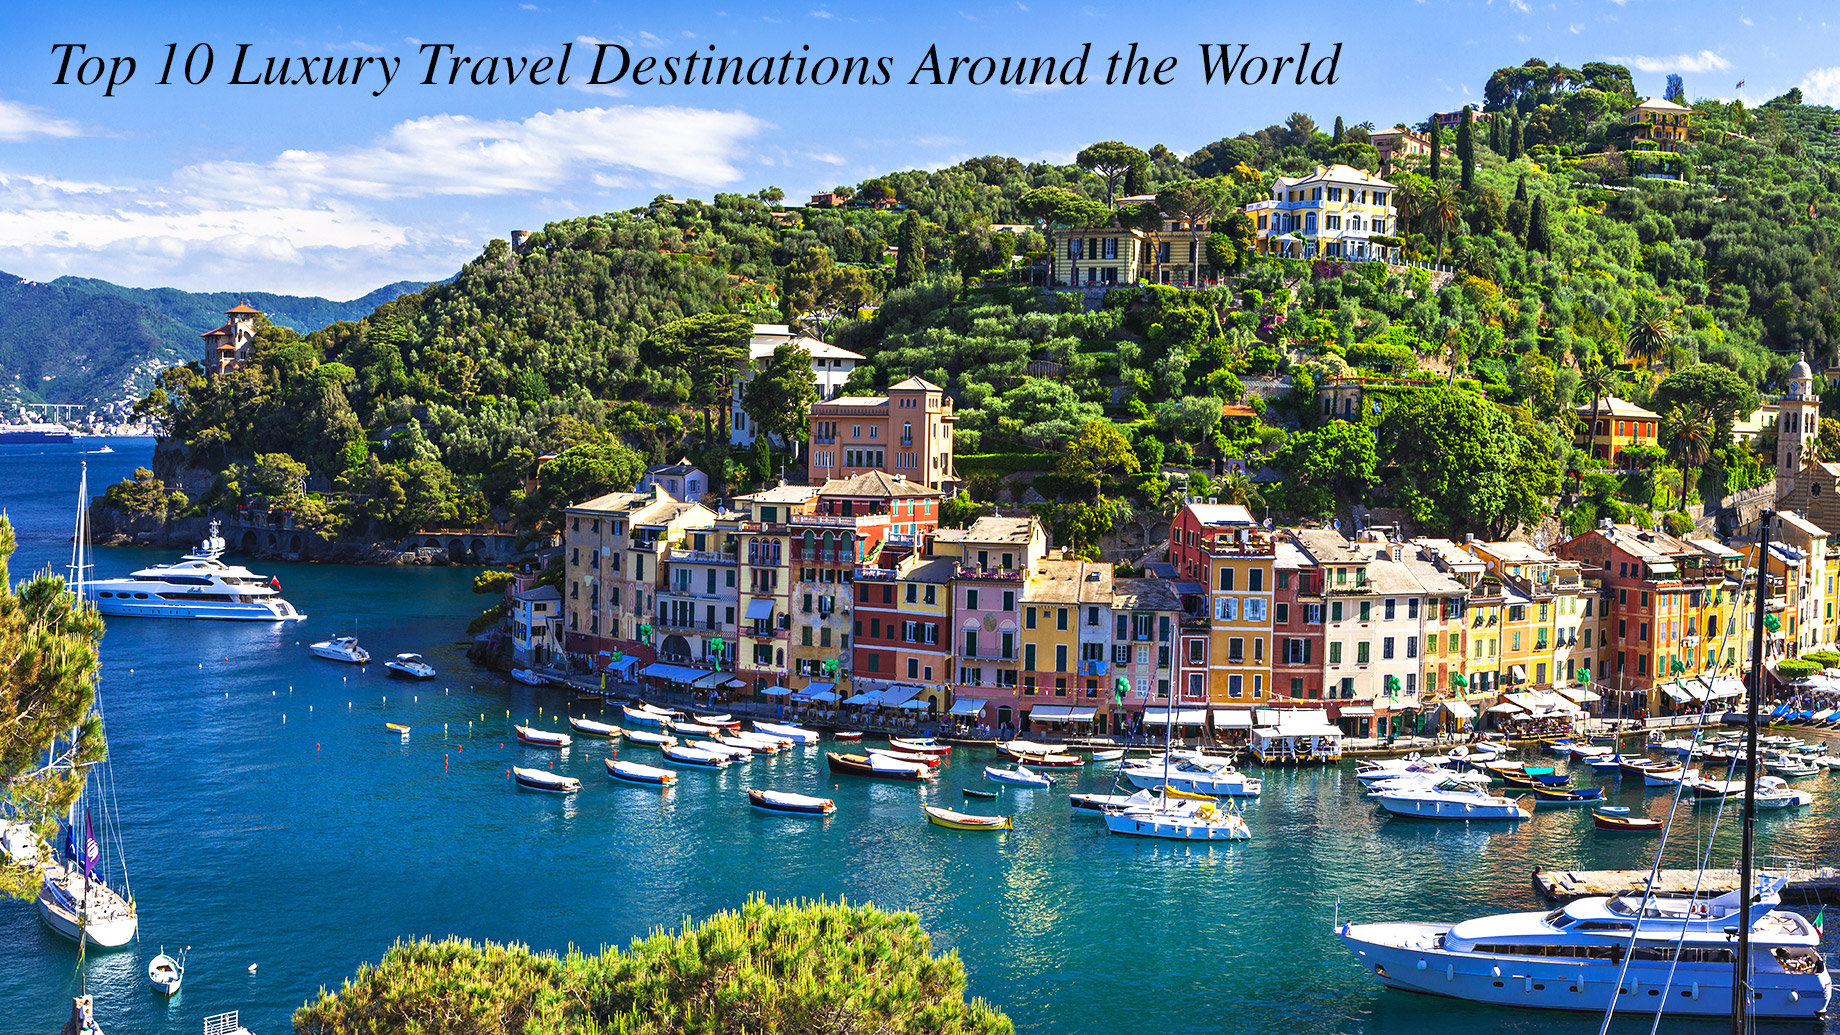 Top 10 Luxury Travel Destinations Around the World – The Pinnacle List